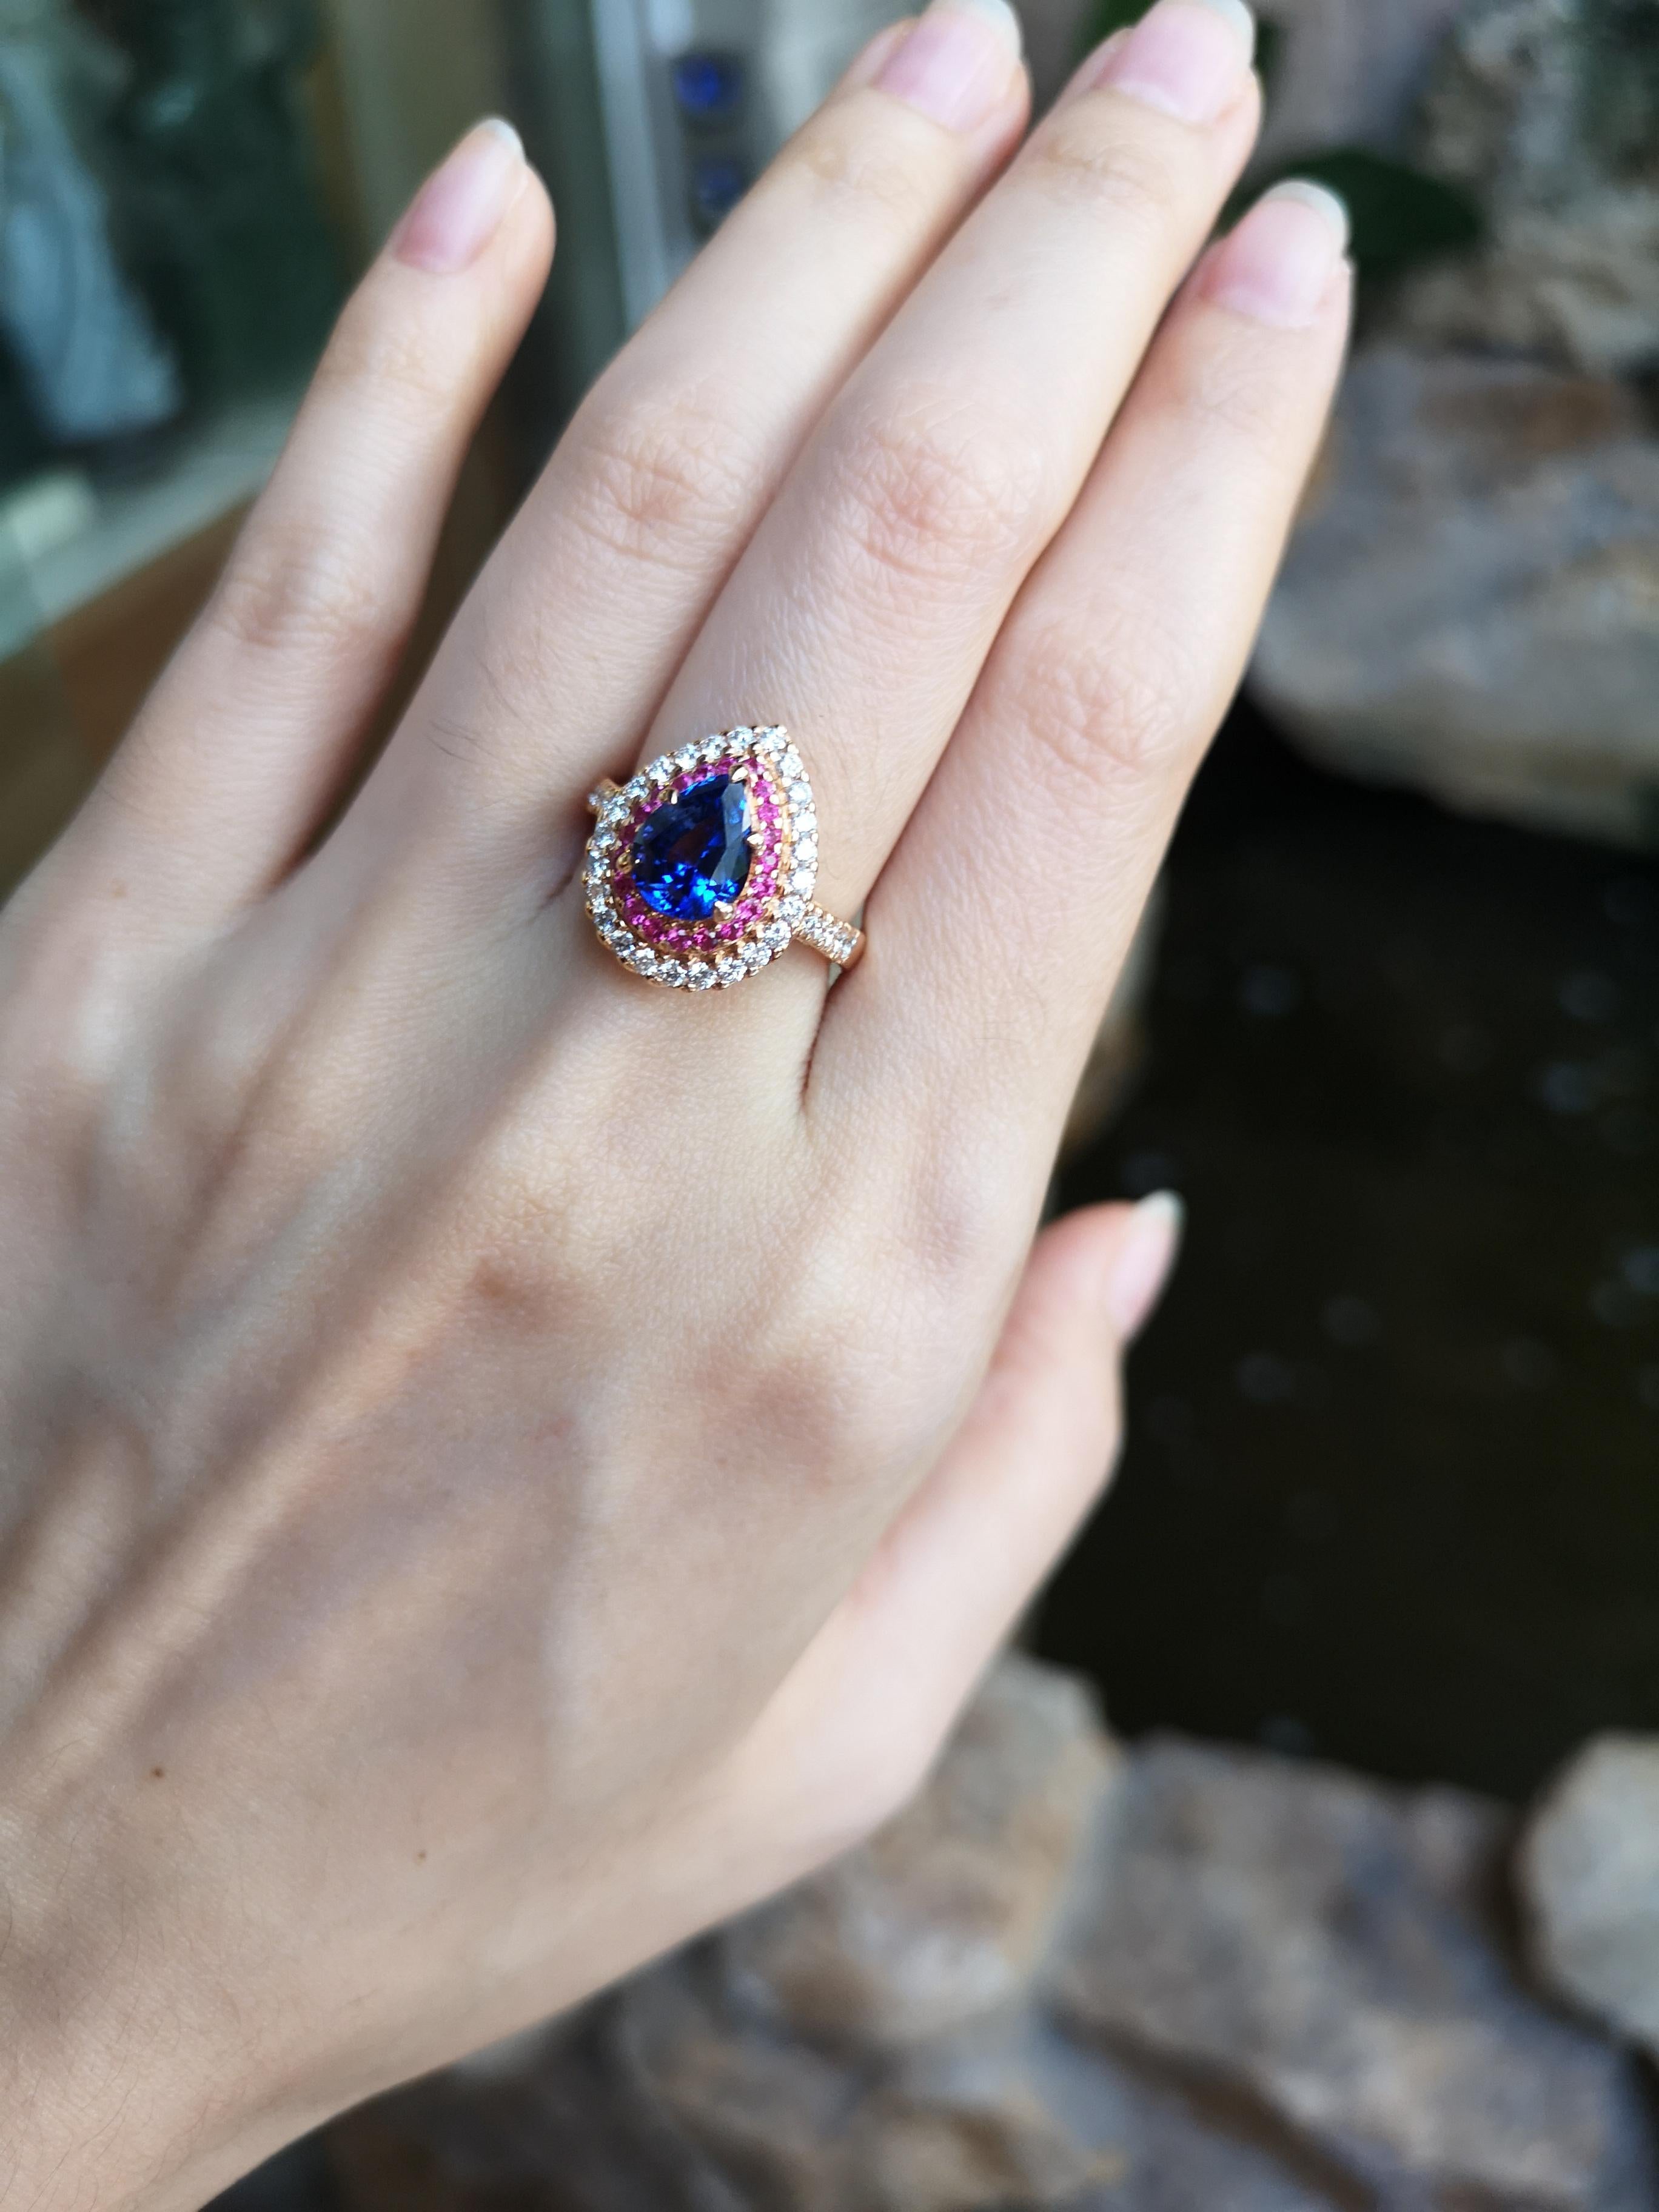 Blue Sapphire 2.40 Carats, Pink Sapphire 0.27 carat with Diamond 0.54 carat Ring set in 18 Karat Rose Gold Settings 

Width: 1.3 cm
Length: 1.6 cm 
Ring Size: 51

